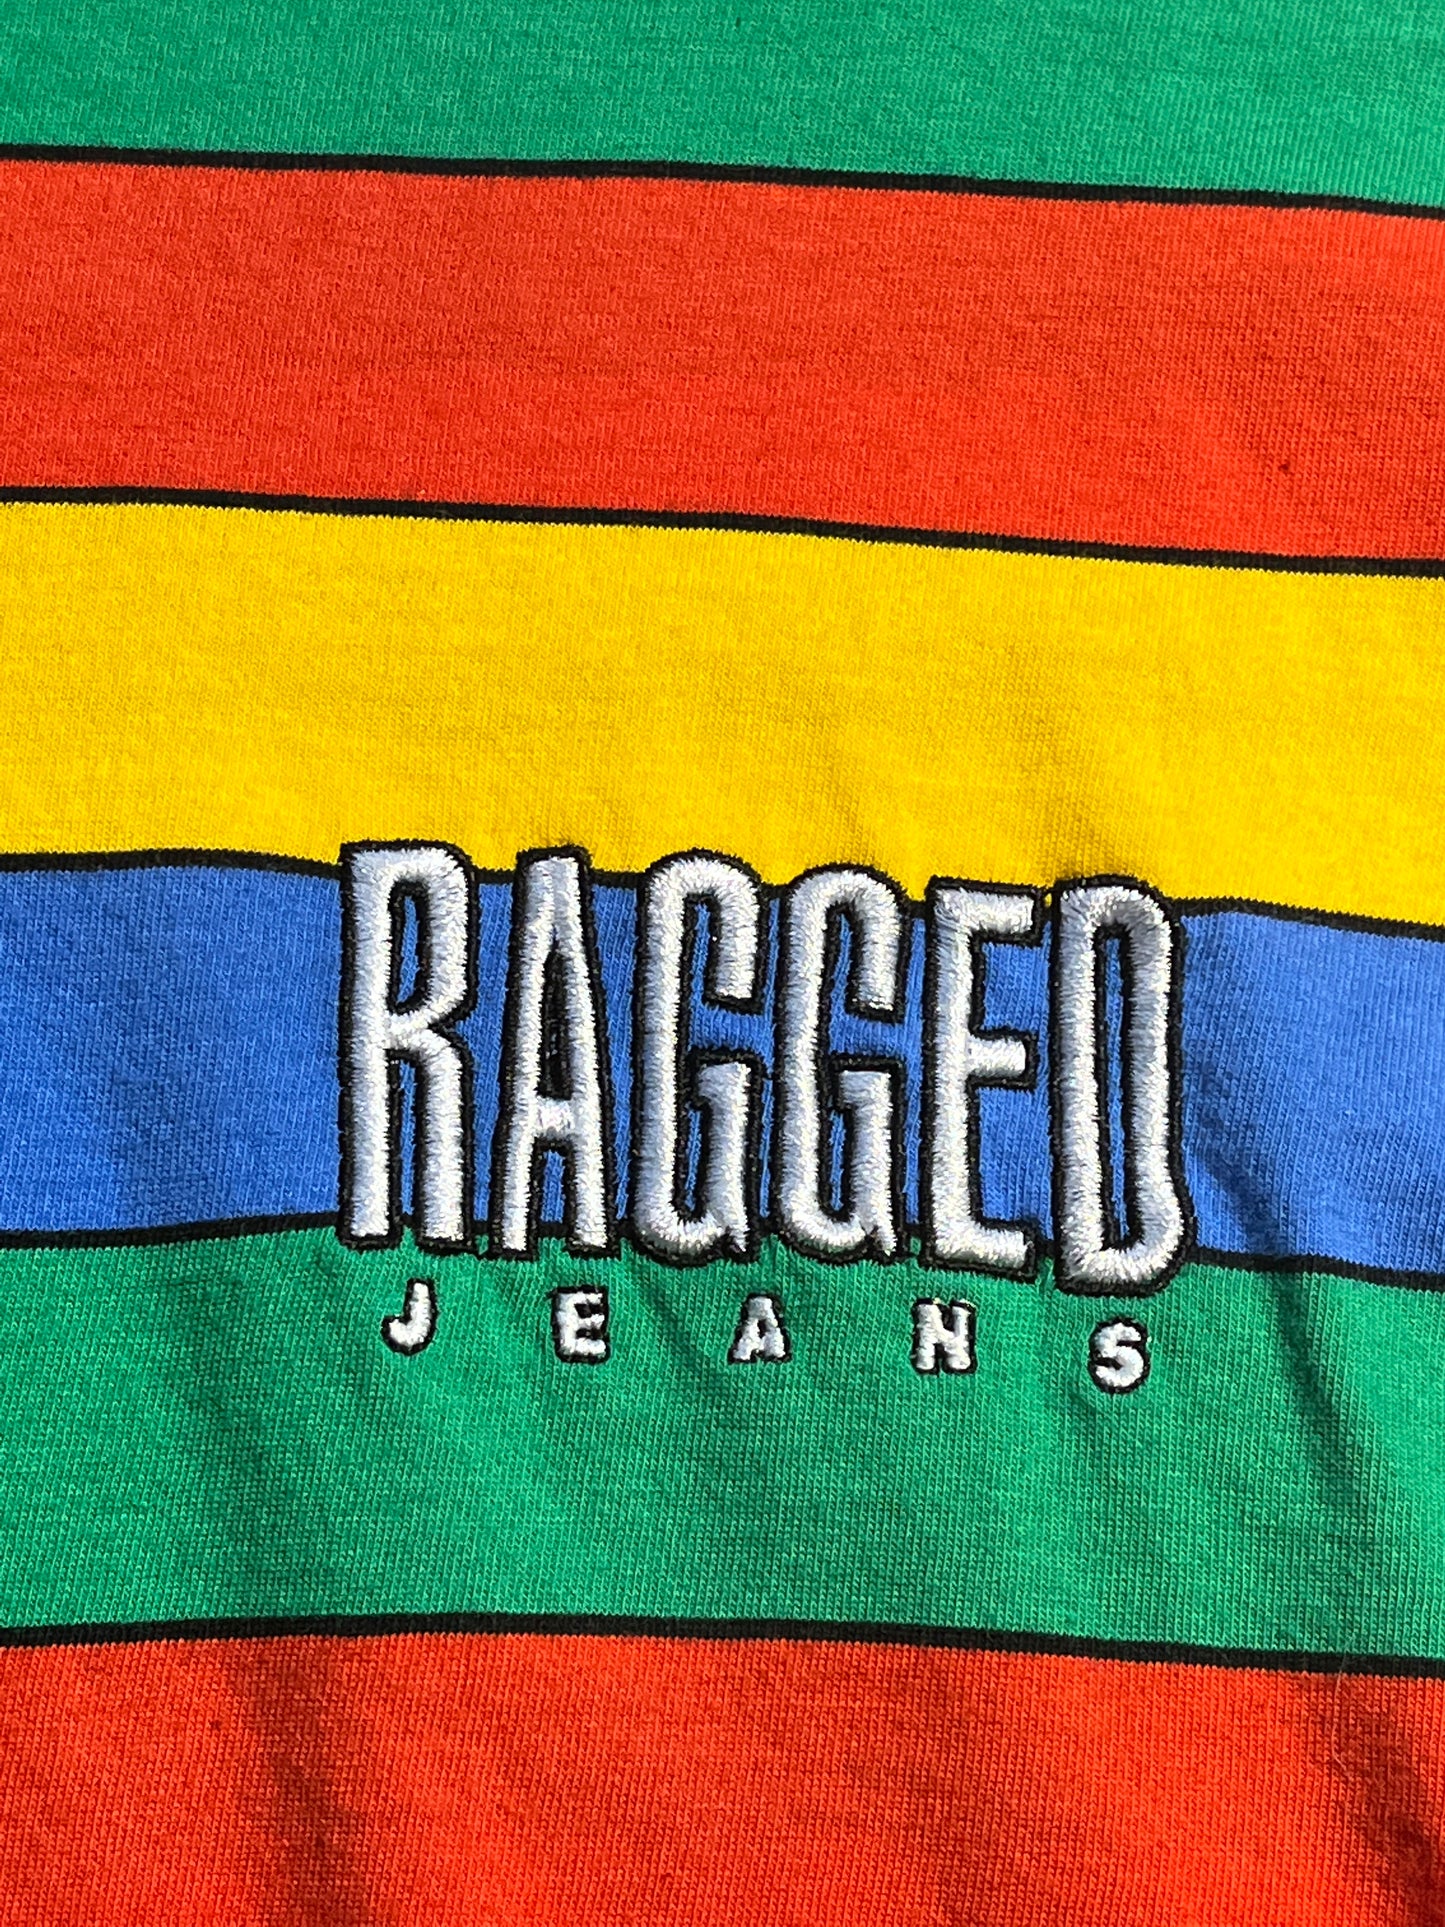 Vintage Ragged Jeans Top Striped Tee